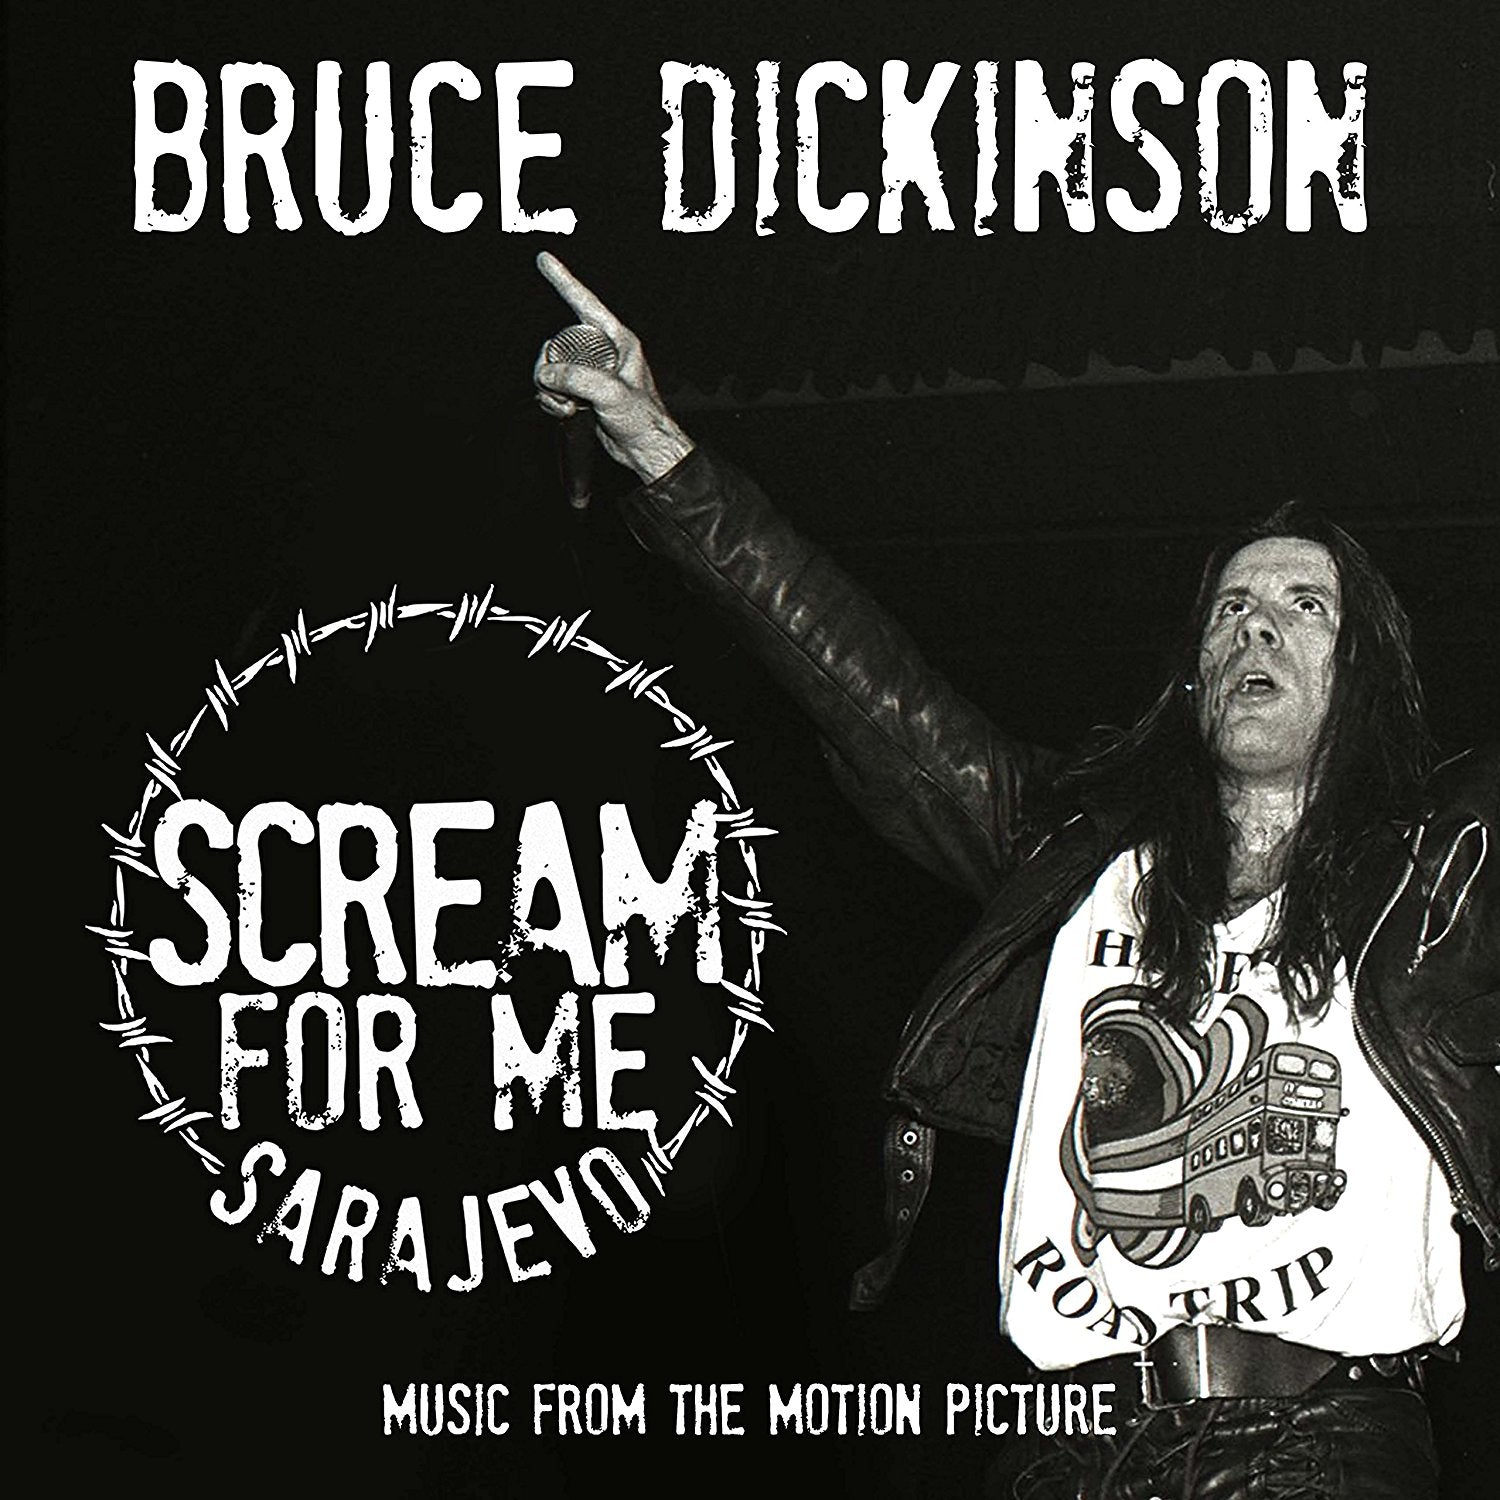 Bruce Dickinson "Scream For Me Sarajevo" Gatefold 2x12" 180g Vinyl